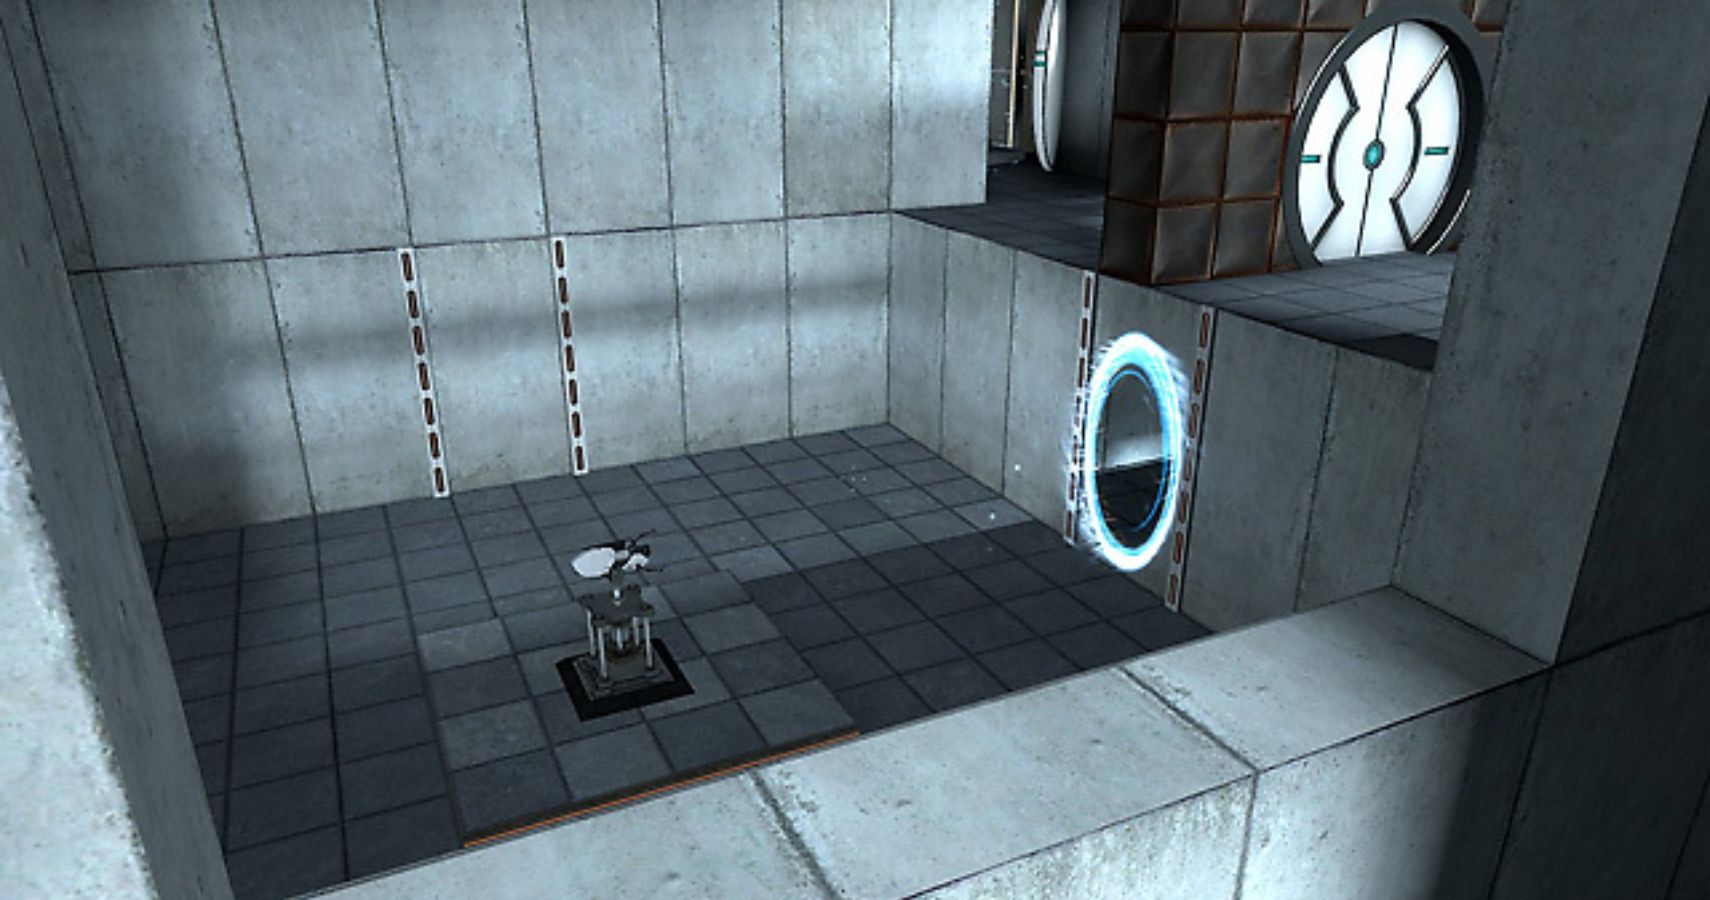 portal test chamber